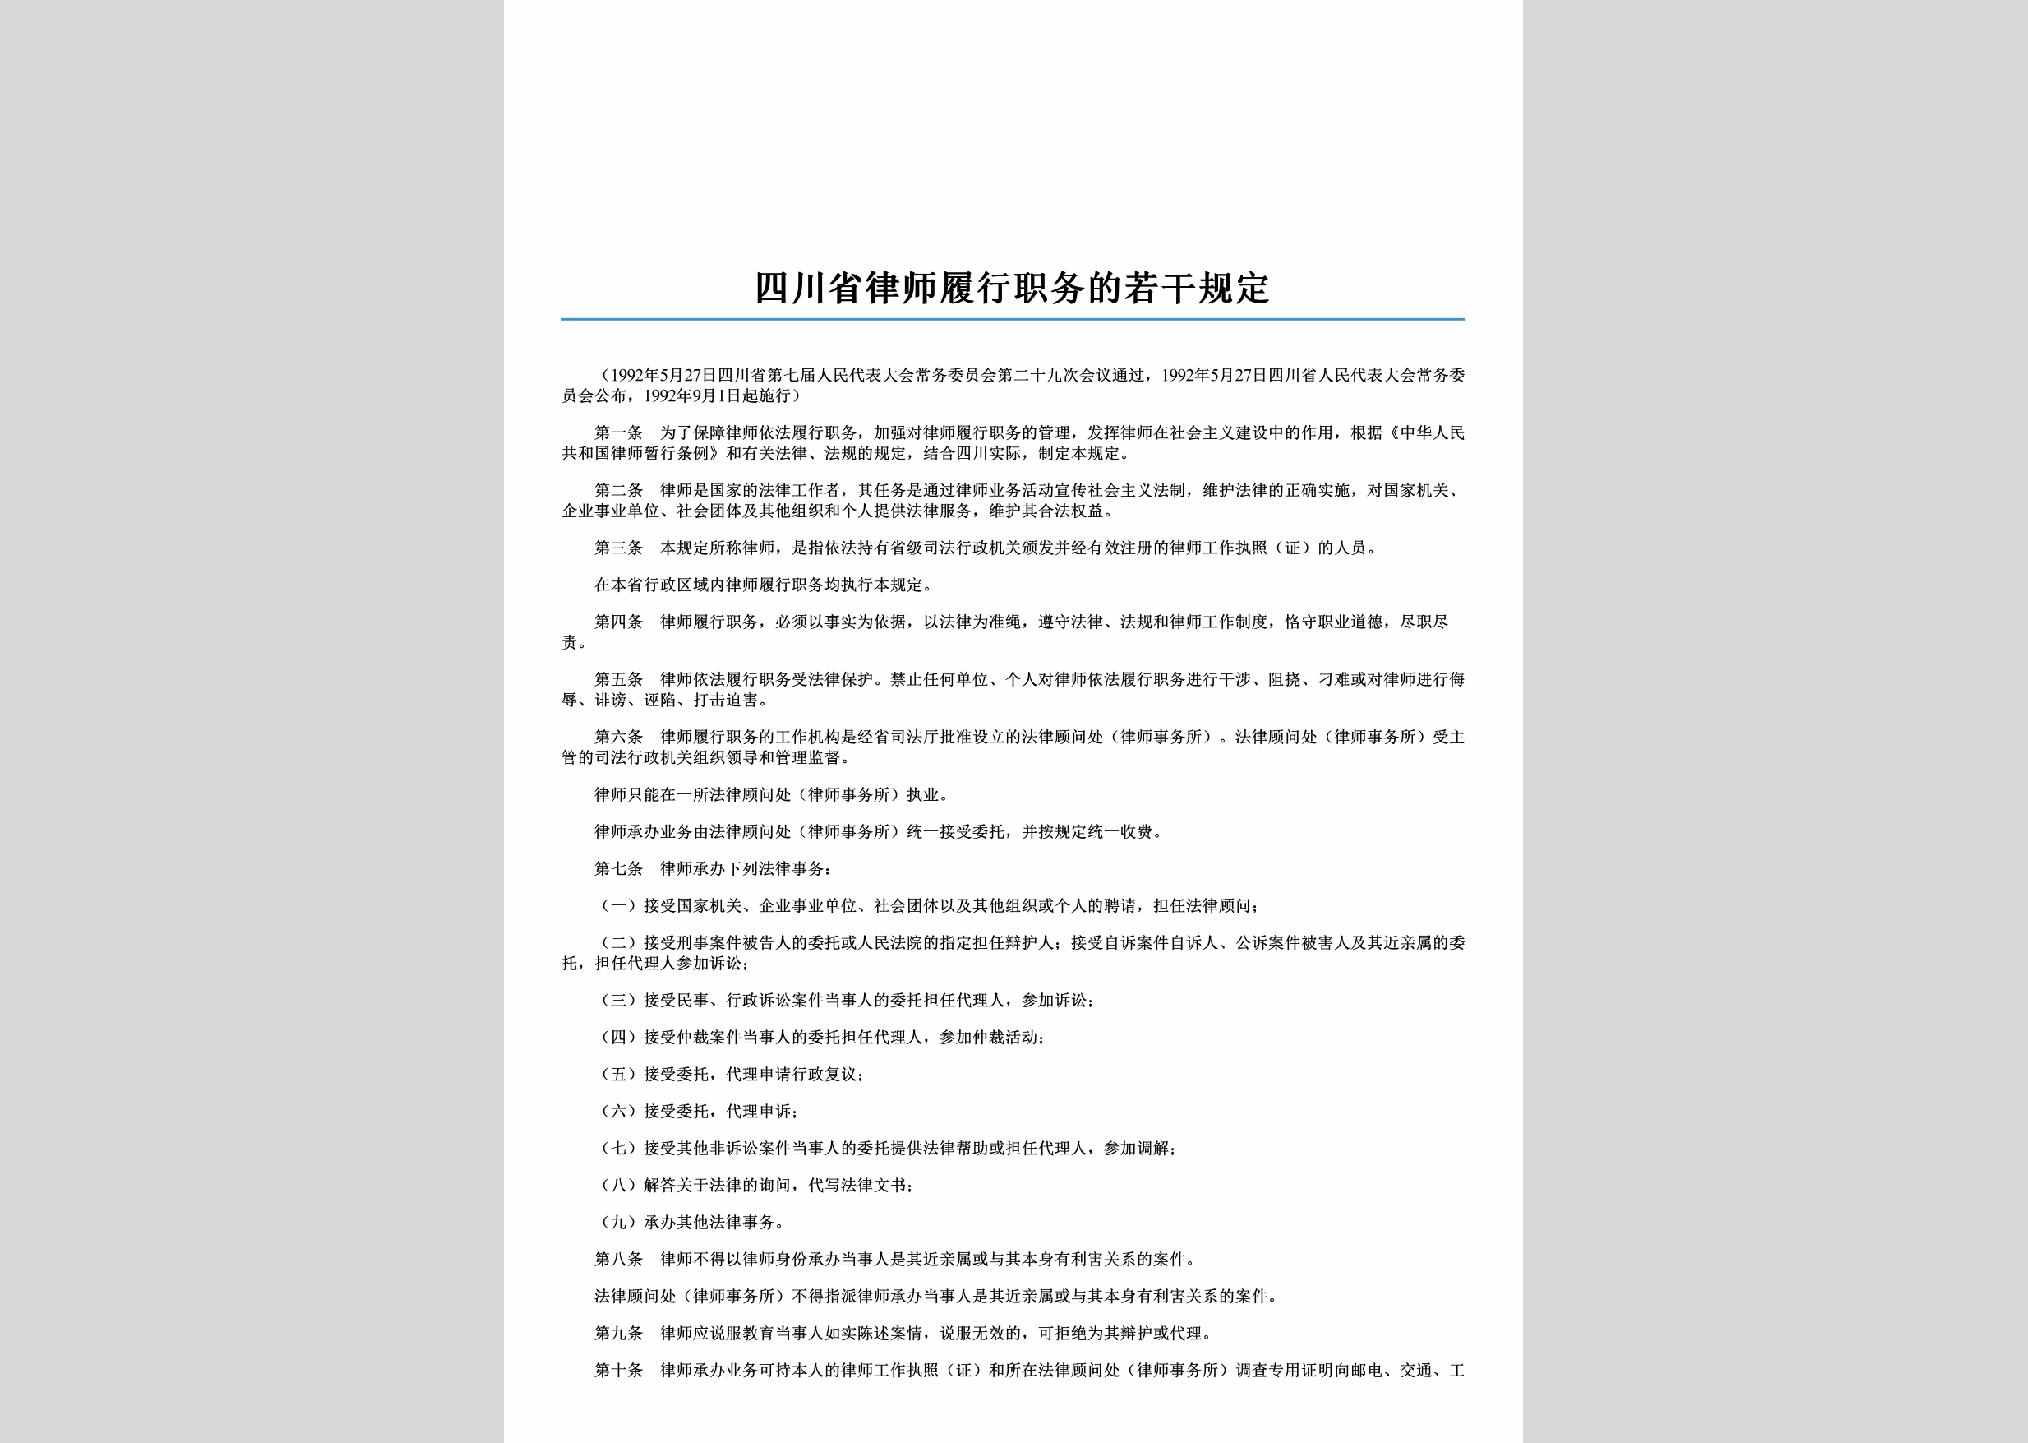 SC-LSLXZWGD-1992：四川省律师履行职务的若干规定